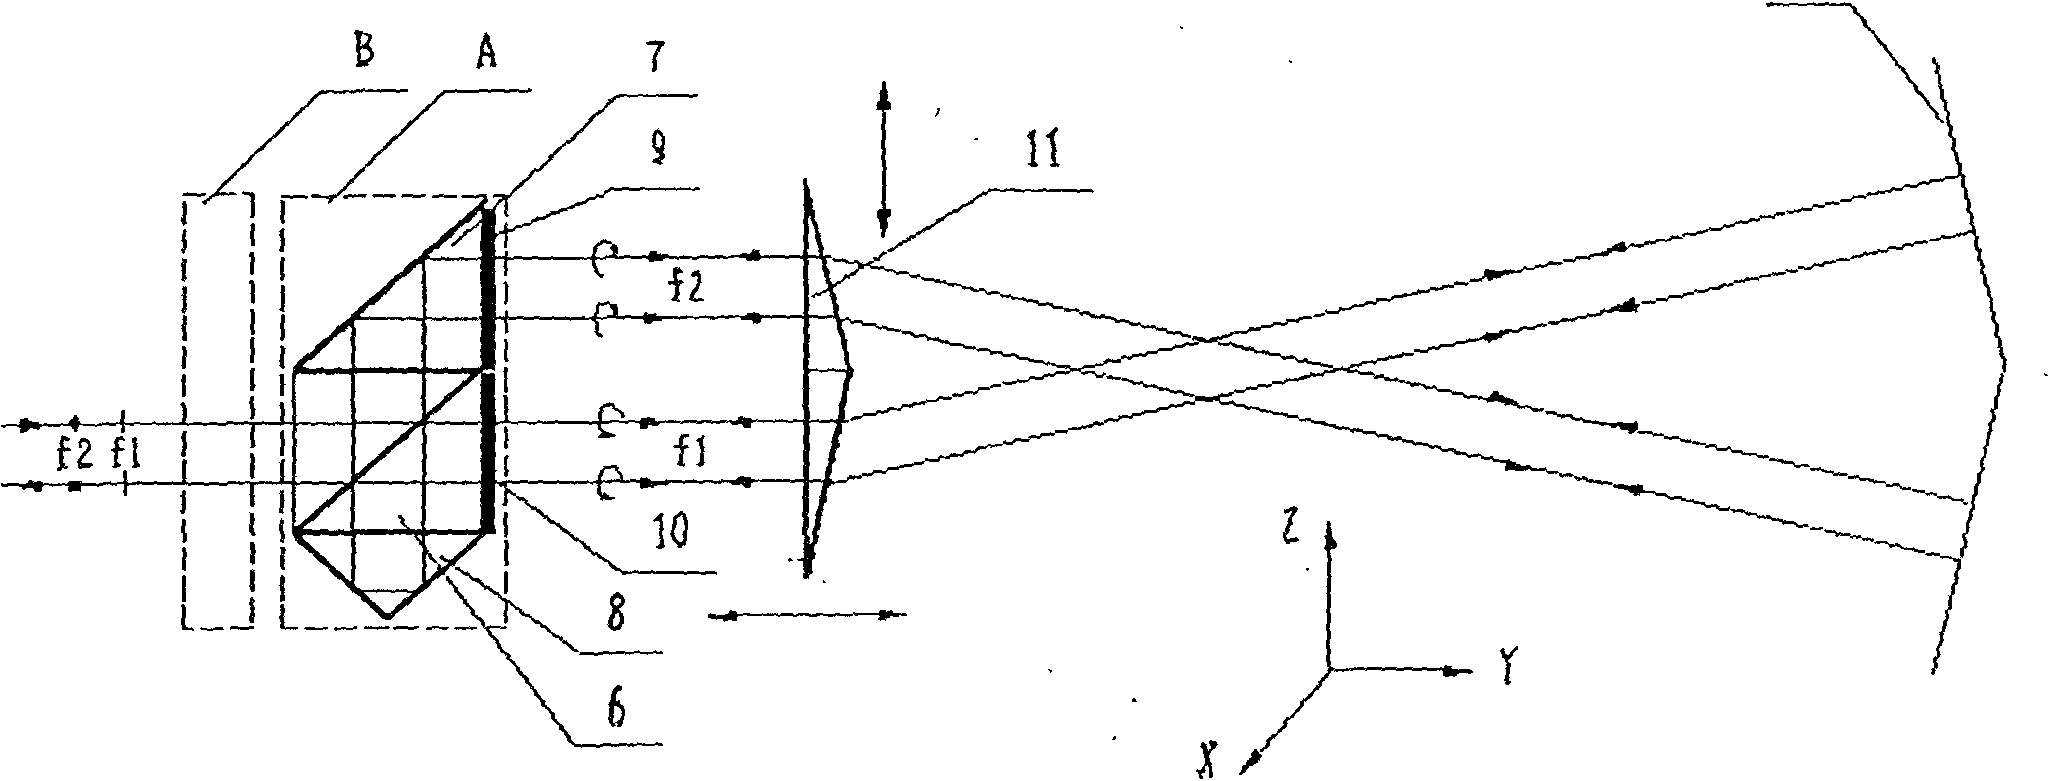 Laser straightness interferometer light path system